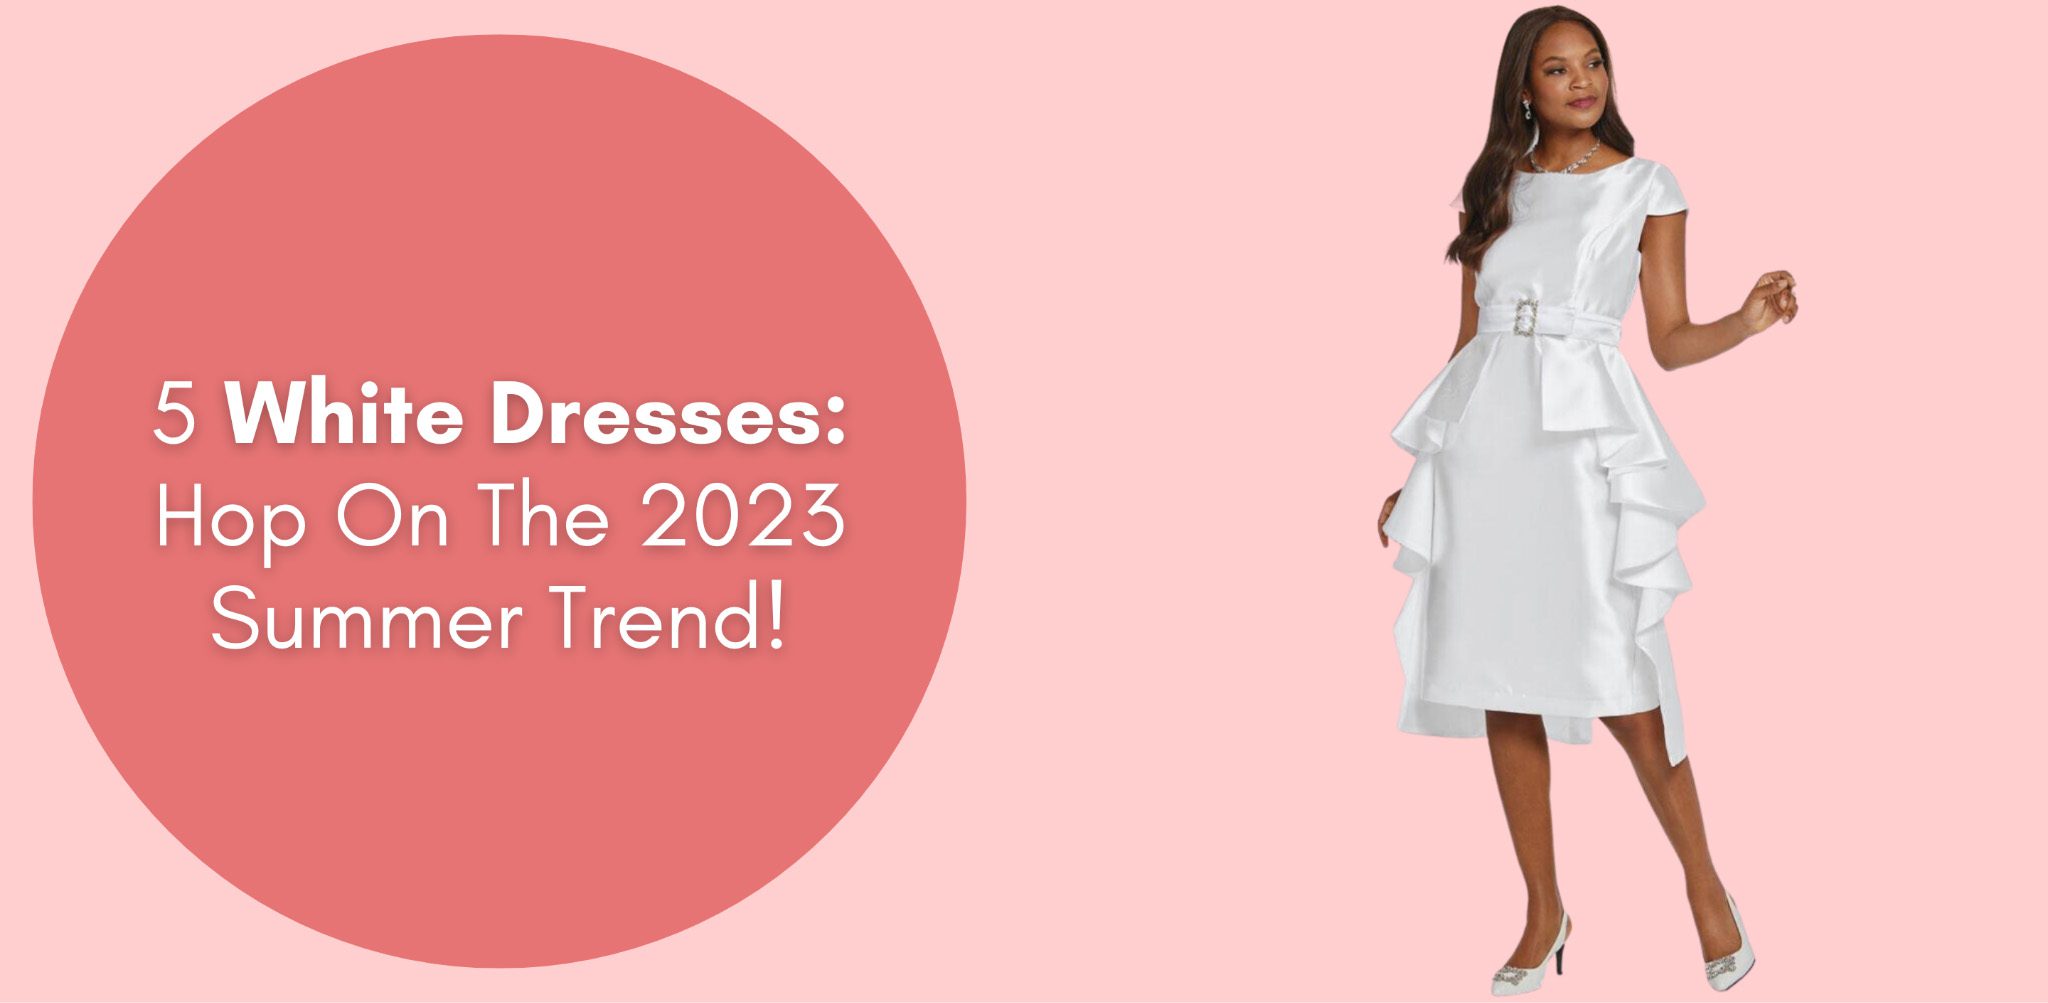 5 White Dresses: Hop On The 2023 Summer Trend!